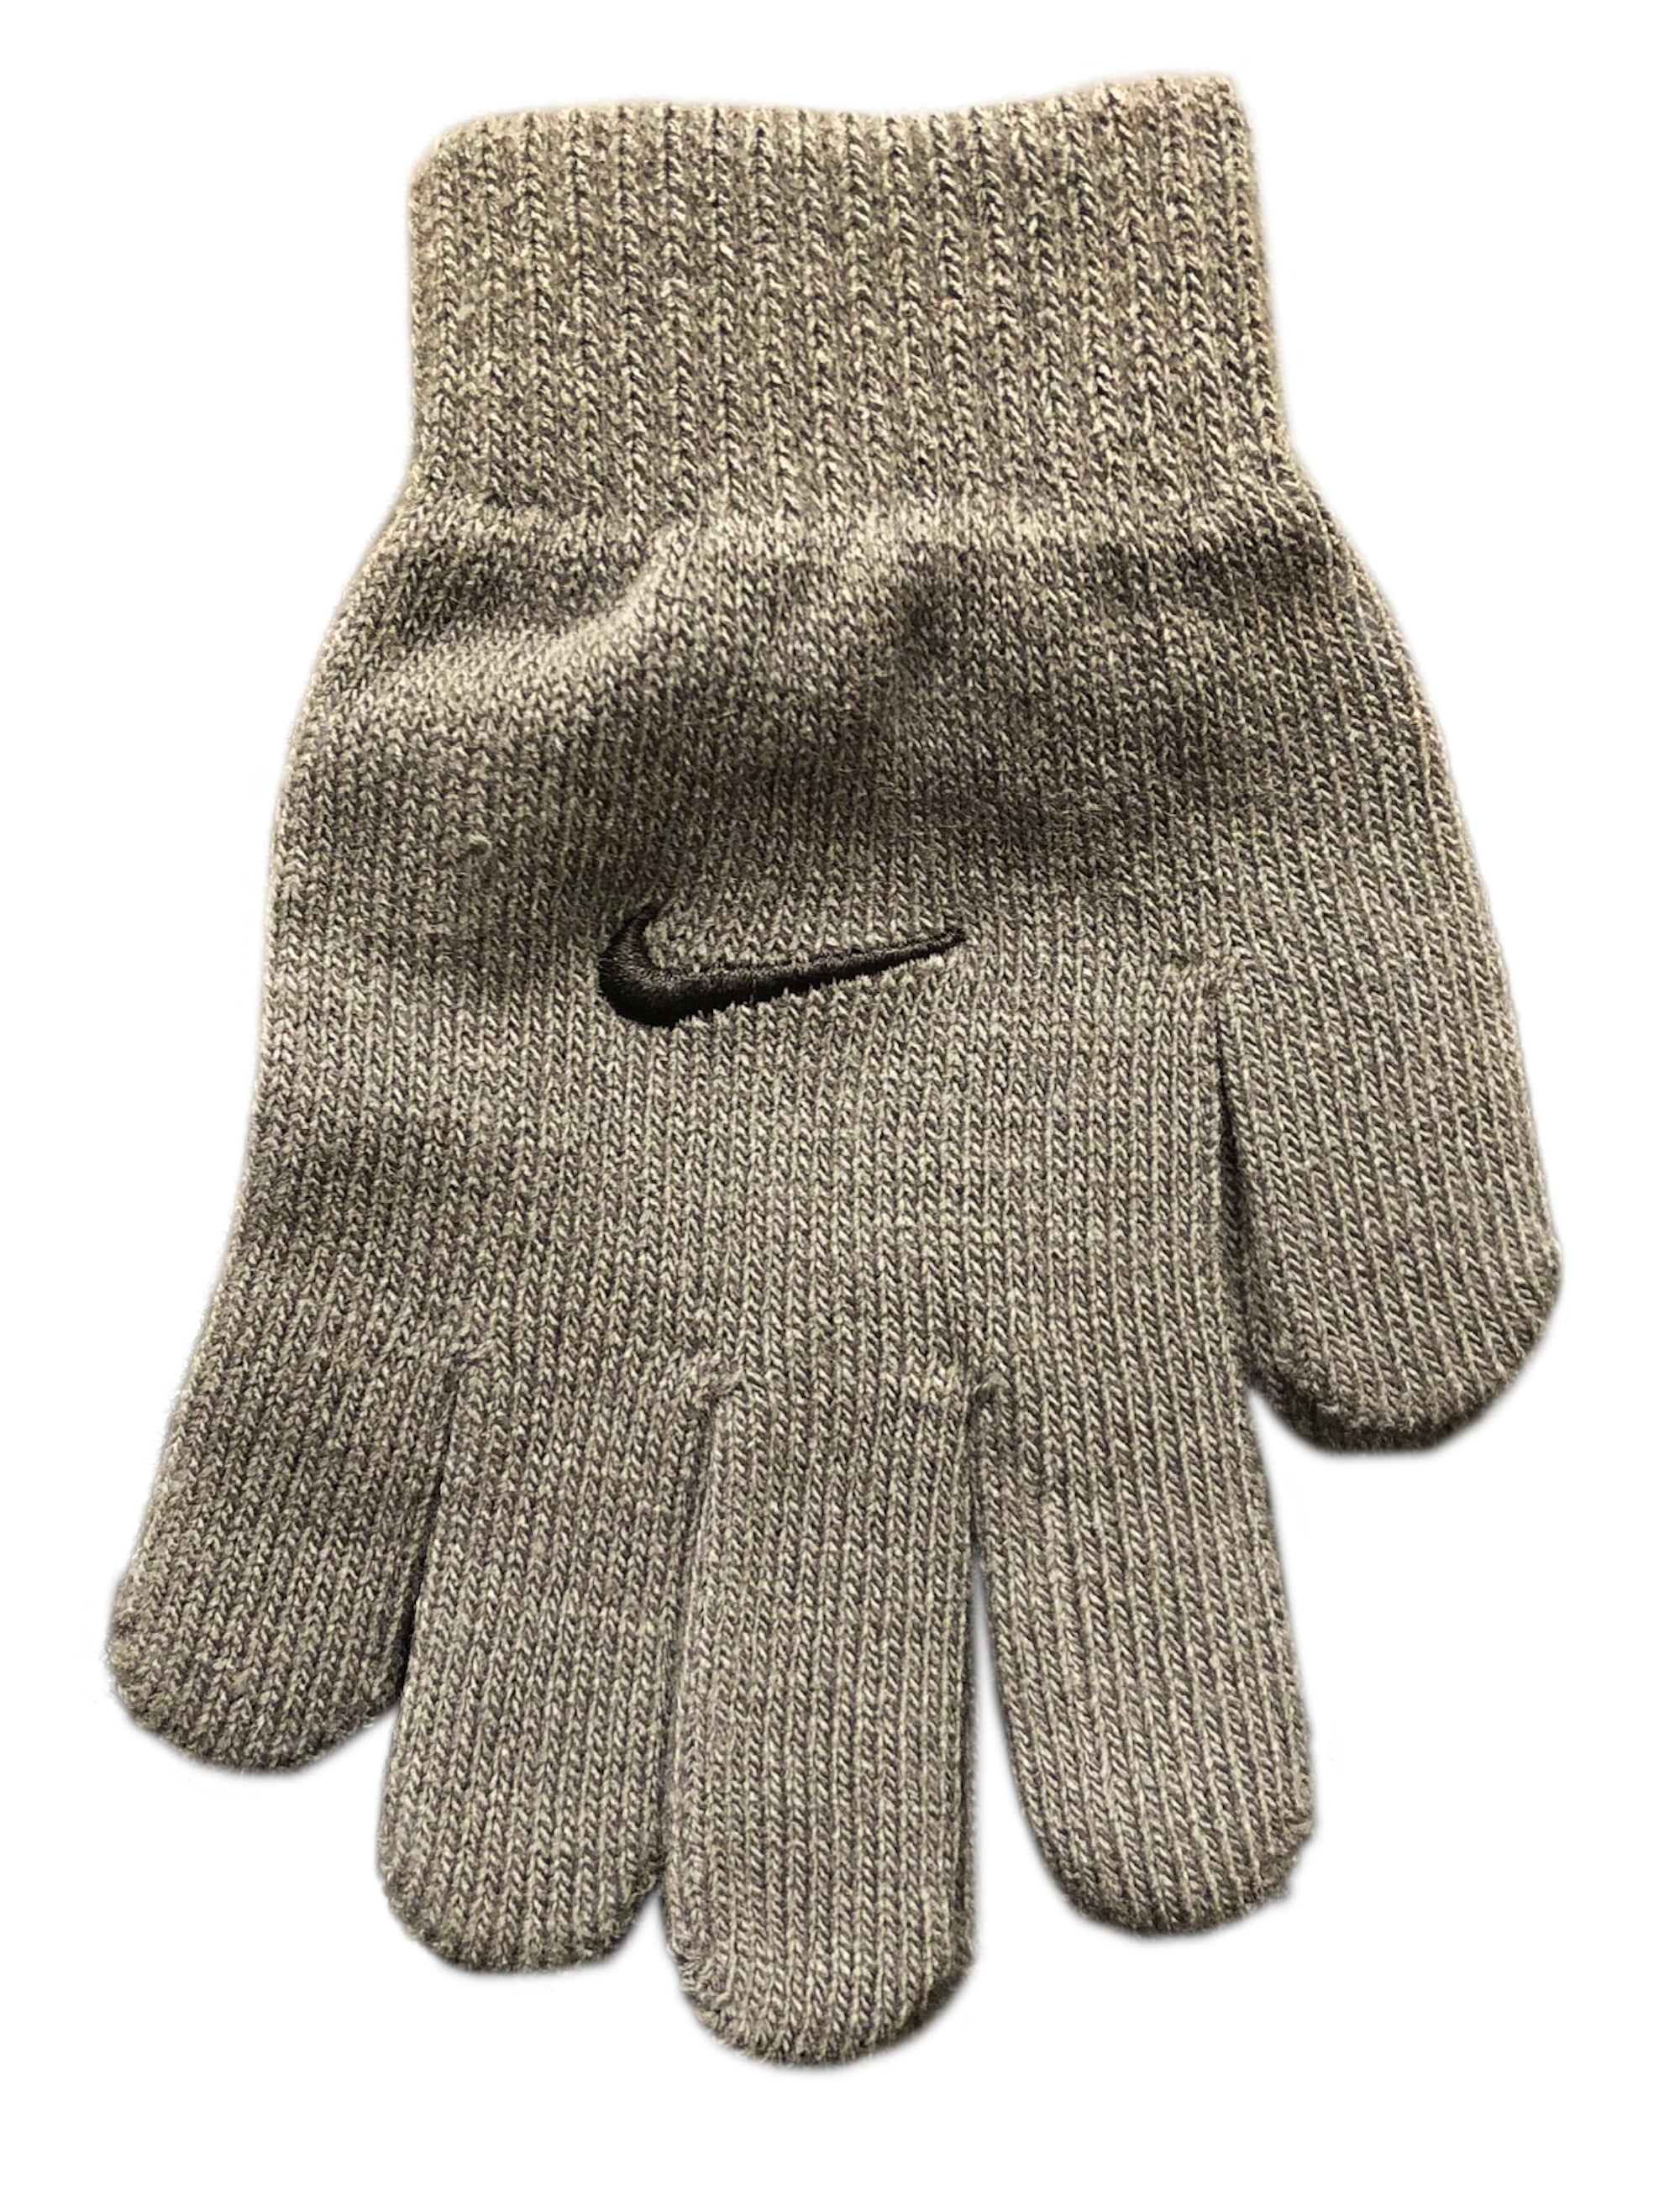 Dag leerling Voorbijgaand Nike Kids Winter Gloves For Boys Cold Weather Warm Knit (2 Pairs) -  Walmart.com